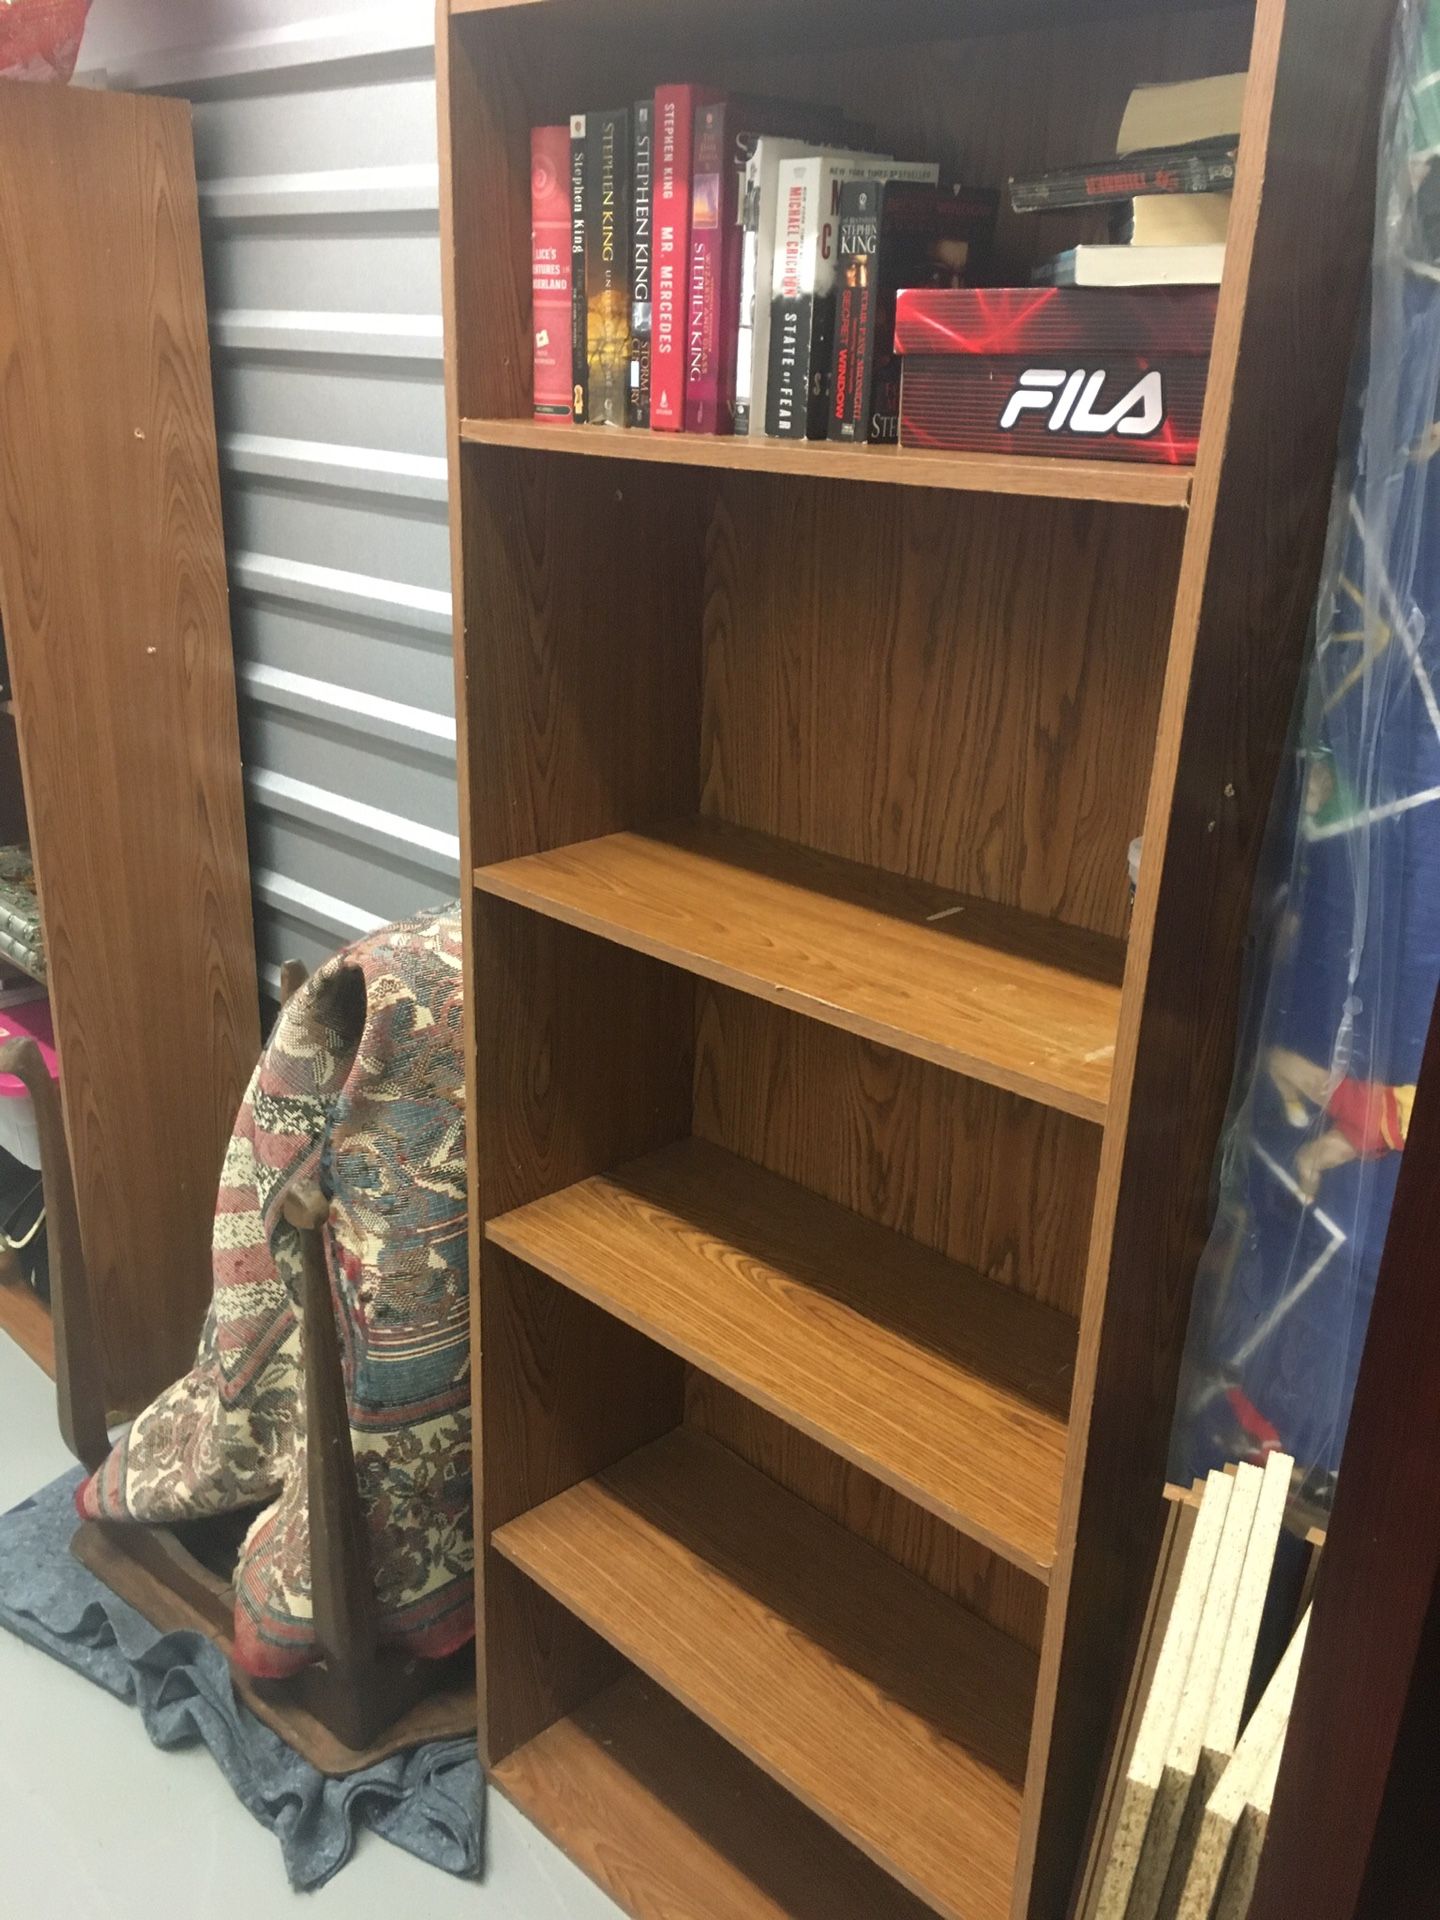 Two book shelves